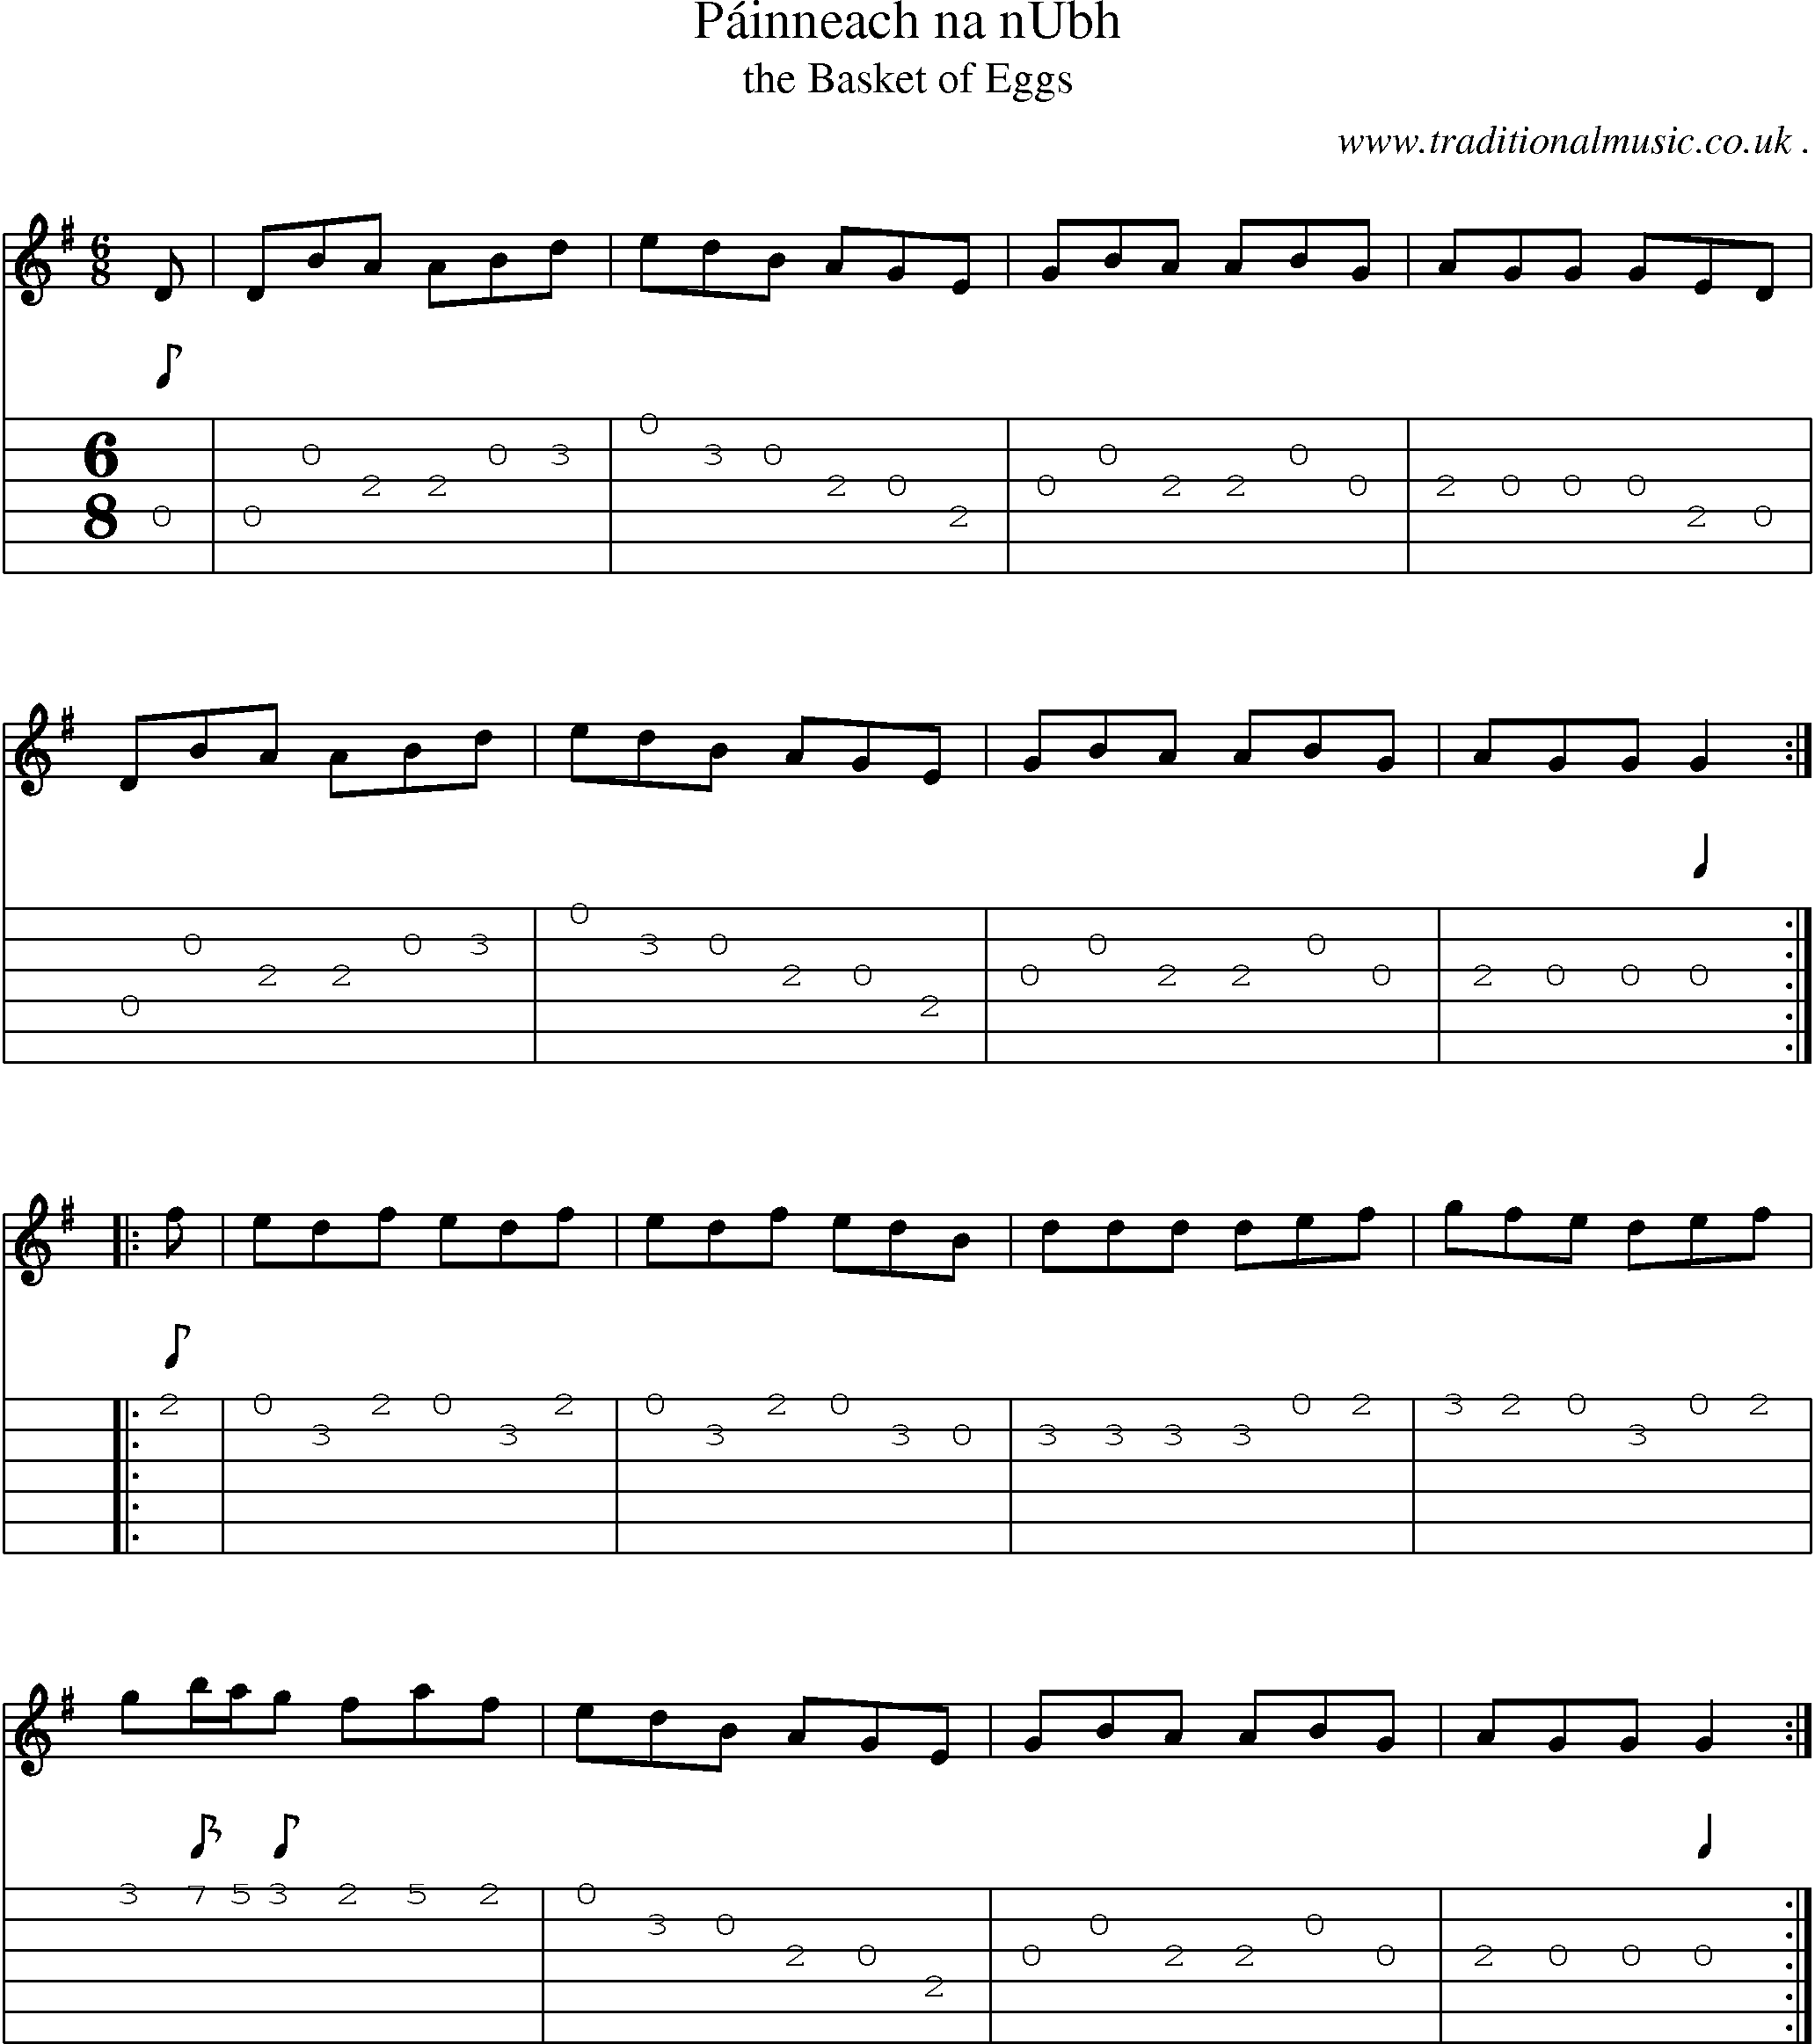 Sheet-music  score, Chords and Guitar Tabs for Painneach Na Nubh